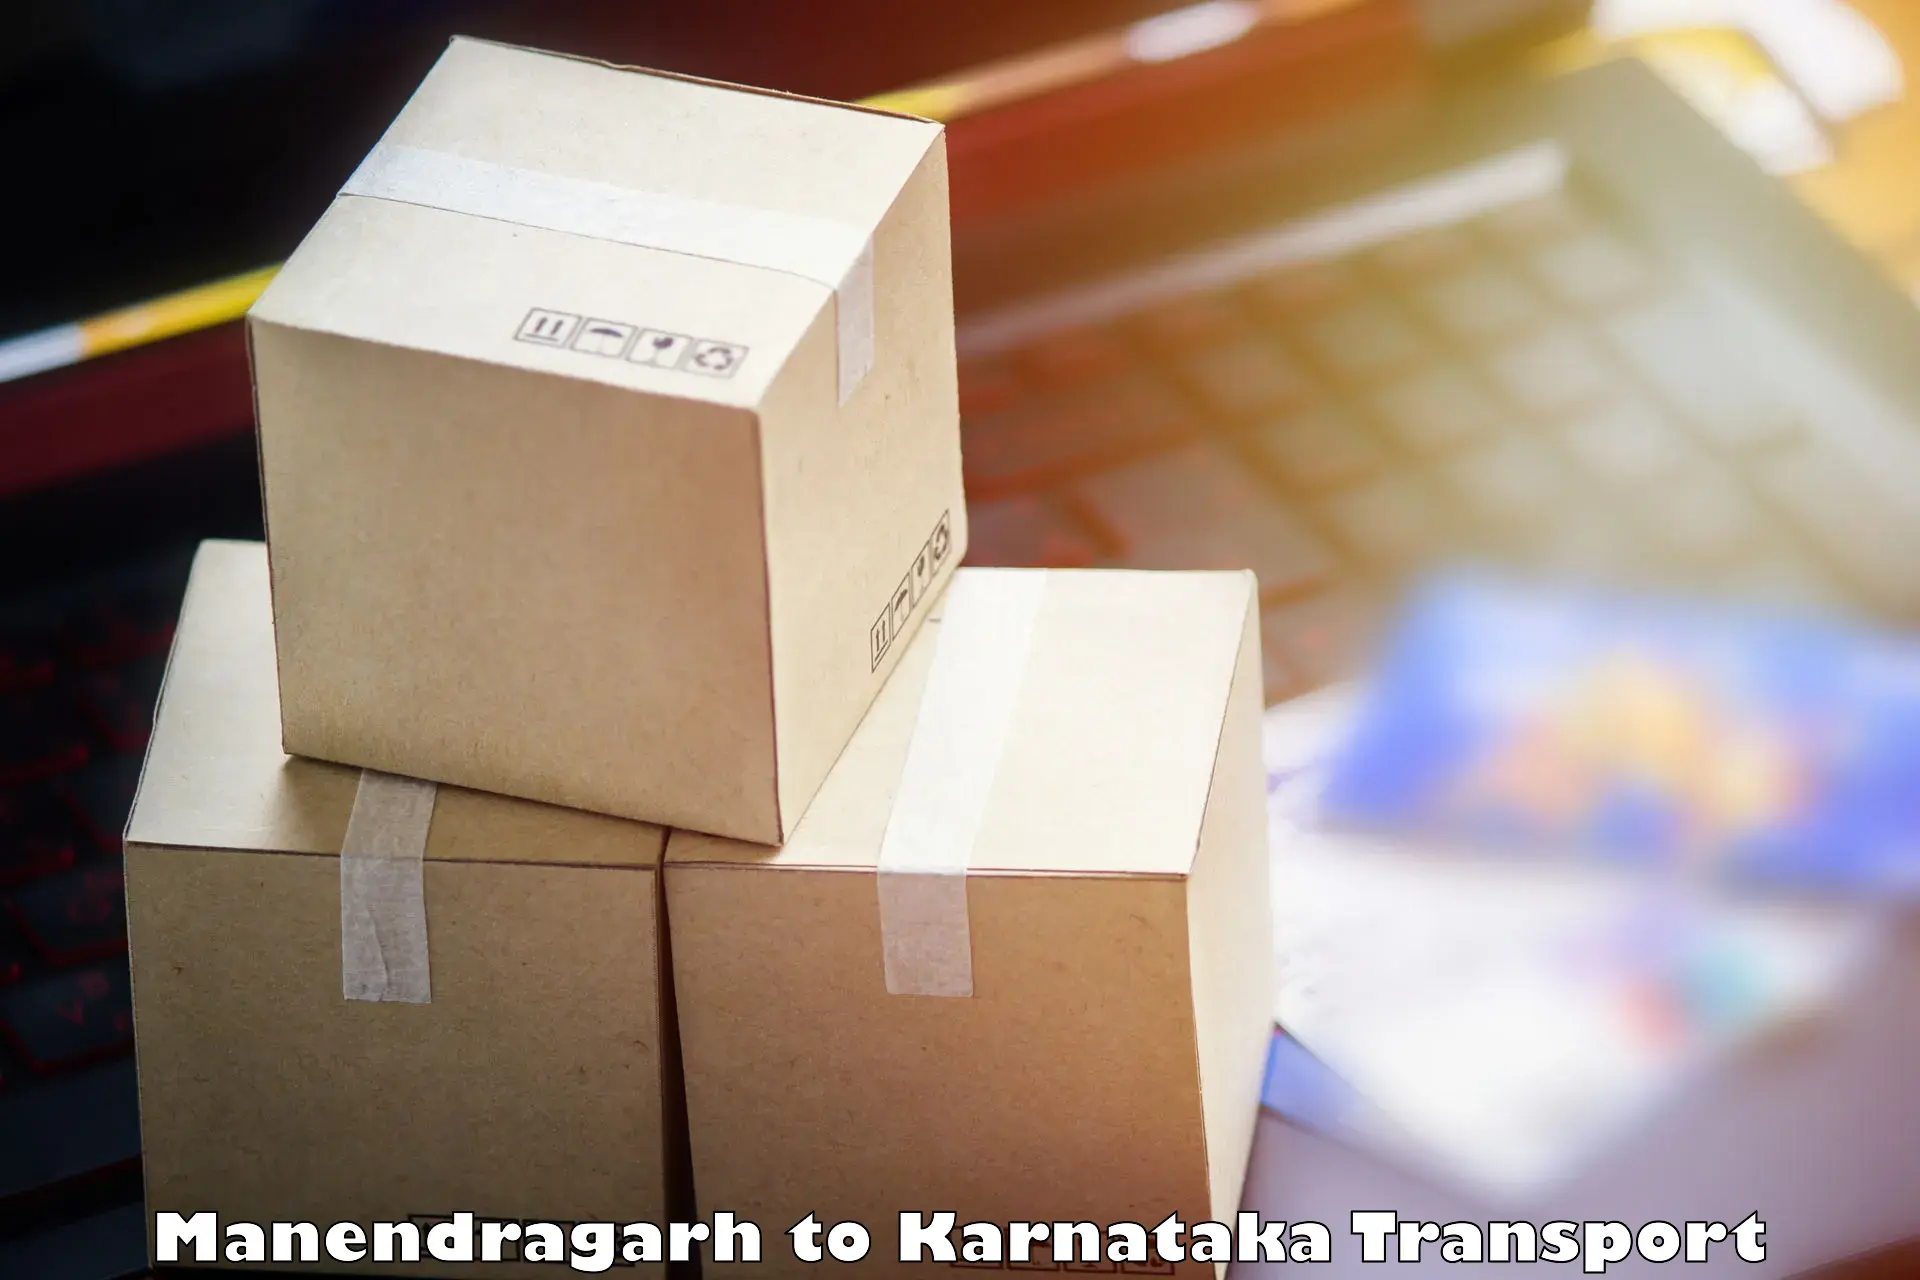 Delivery service Manendragarh to Yadgiri